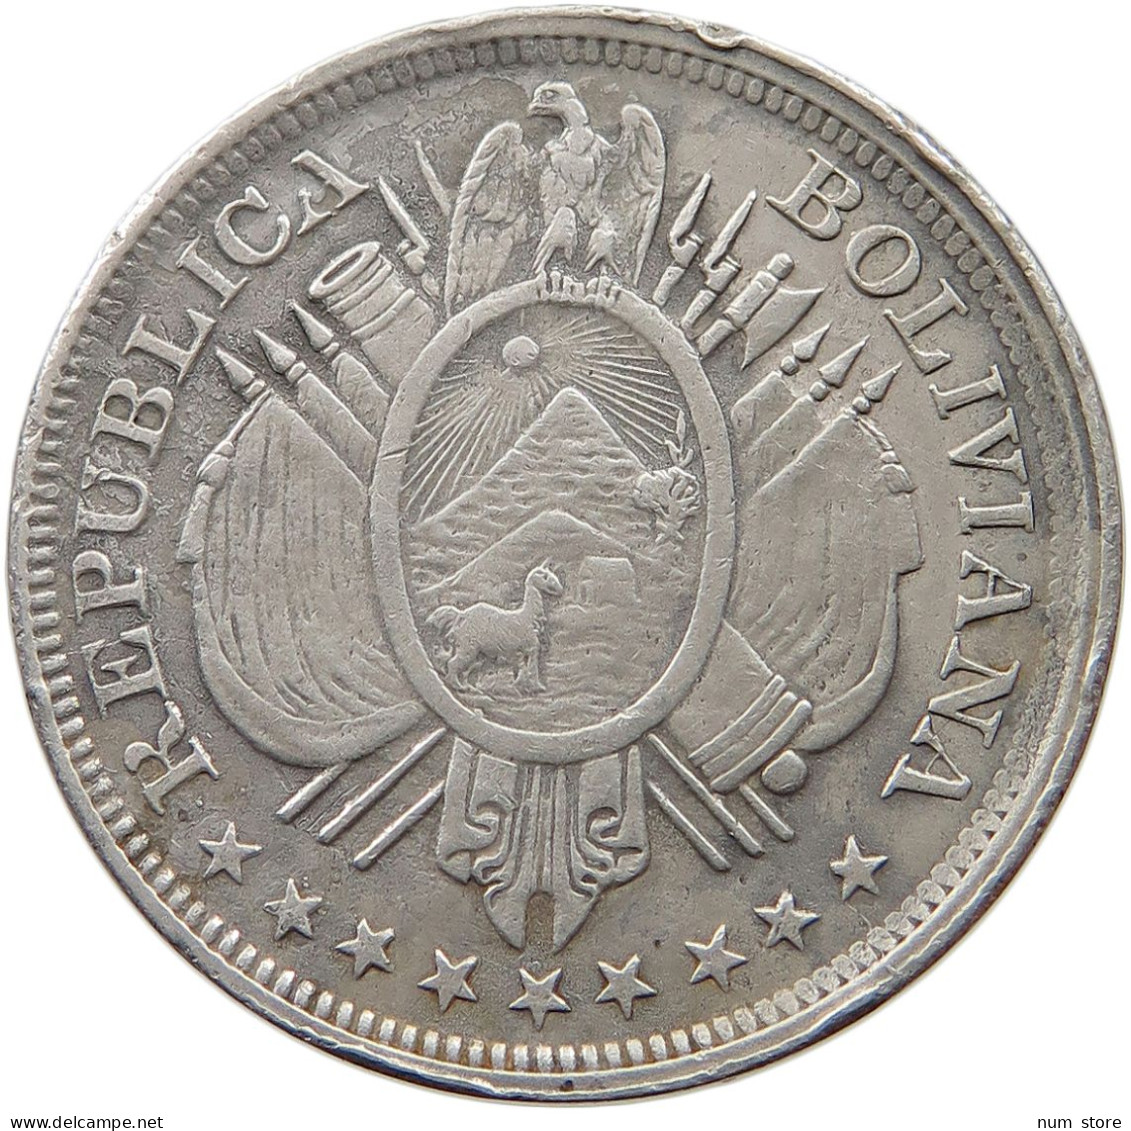 BOLIVIA 50 CENTAVOS 1899 MM  #t063 0151 - Bolivië